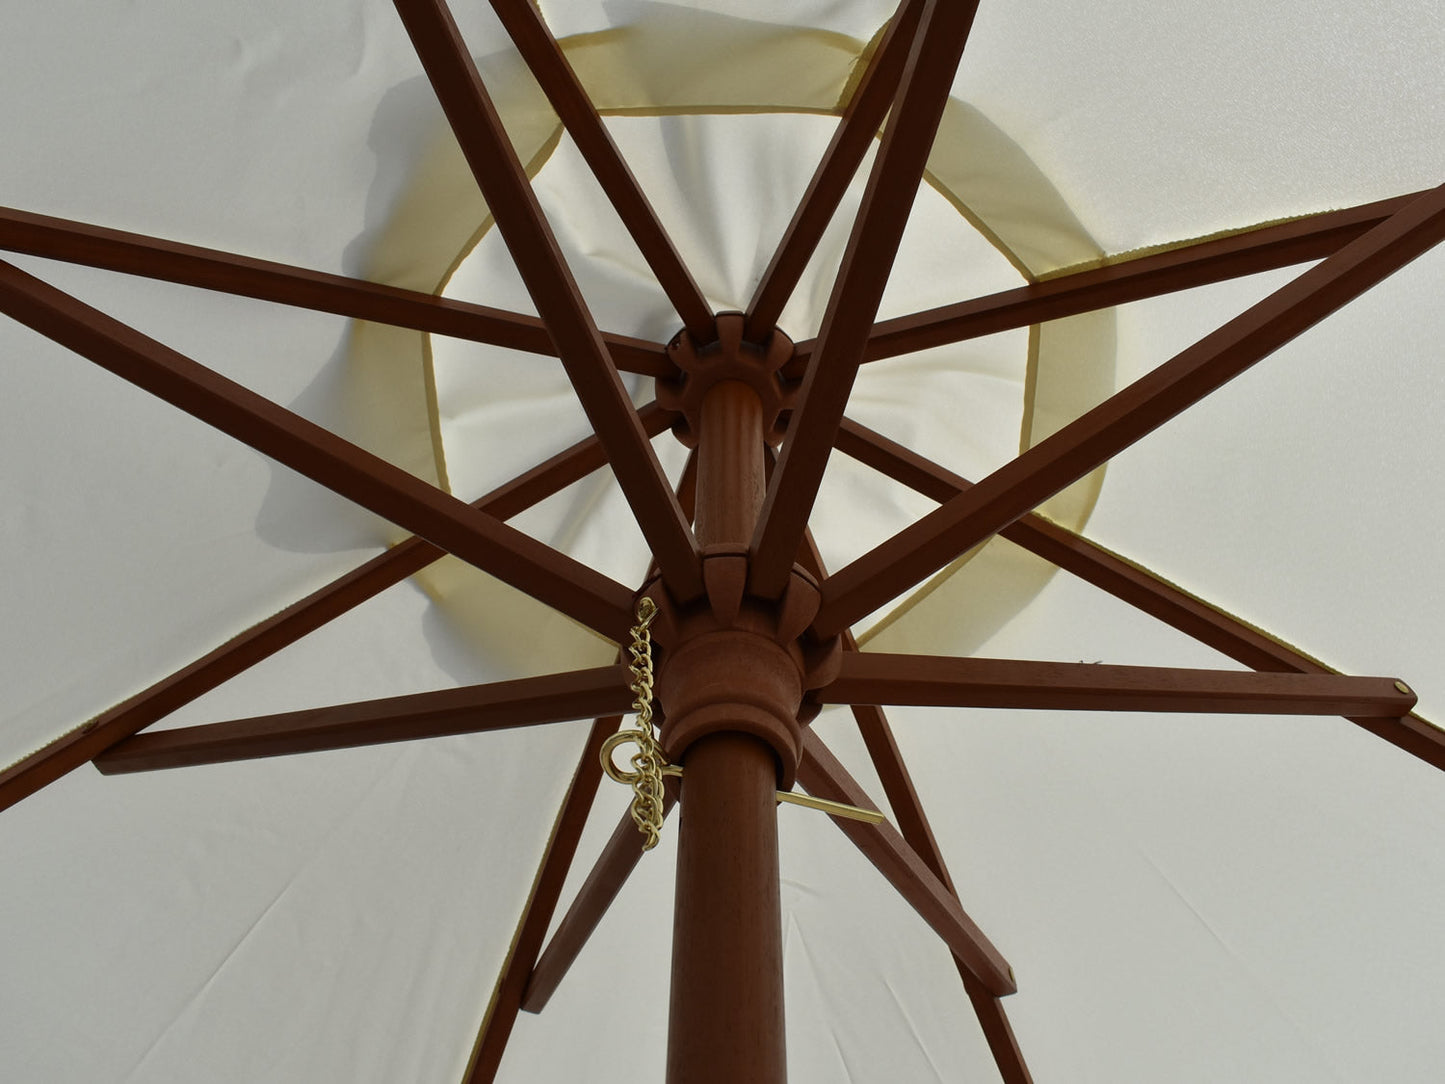 2m Octagonal parasol underside wooden  struts